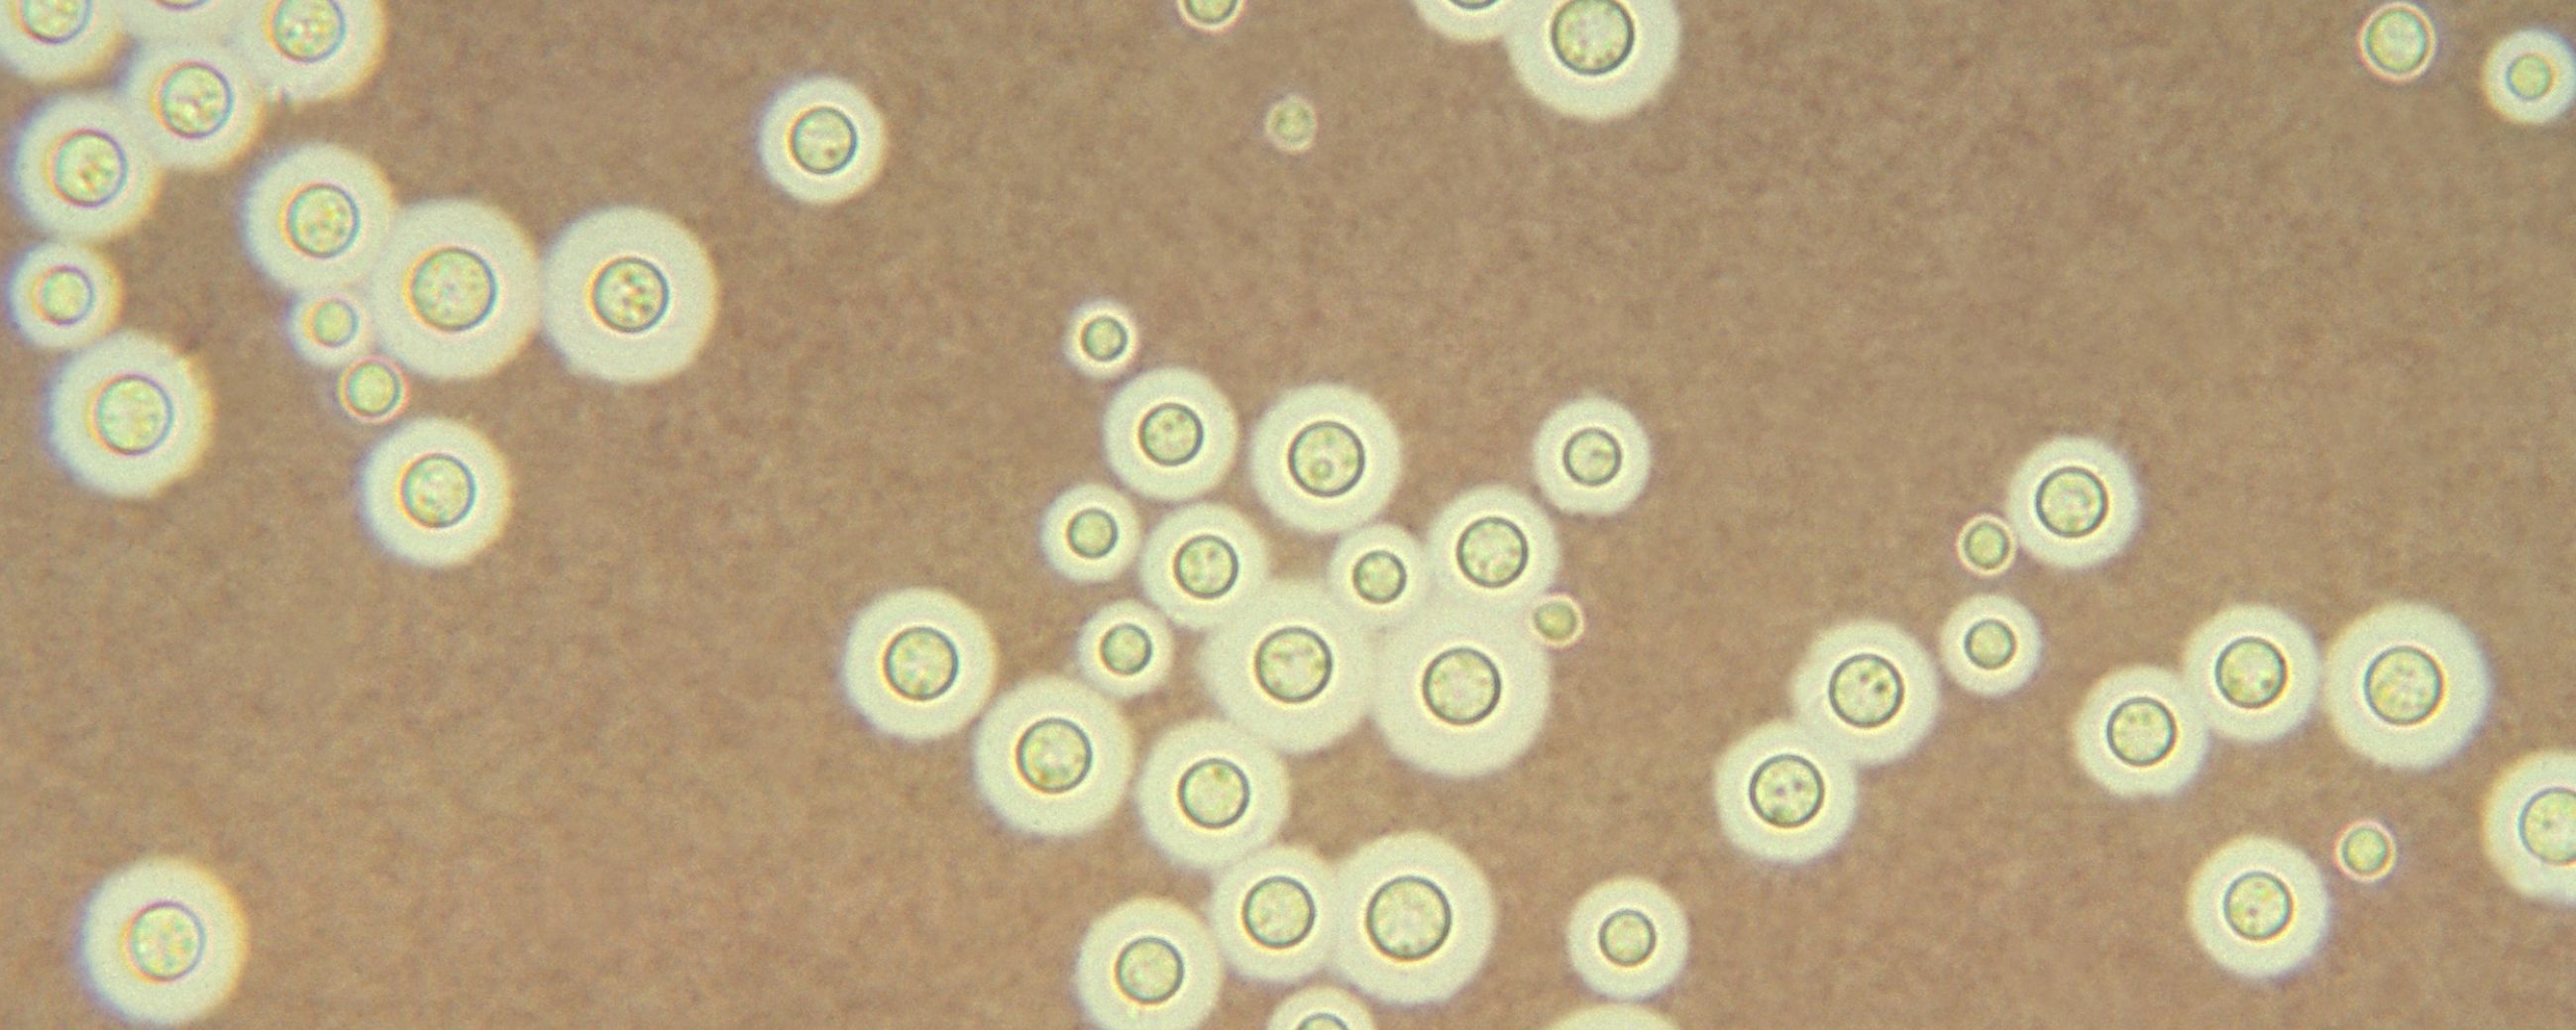 Esta fotomicrografia mostra Cryptococcus neoformans